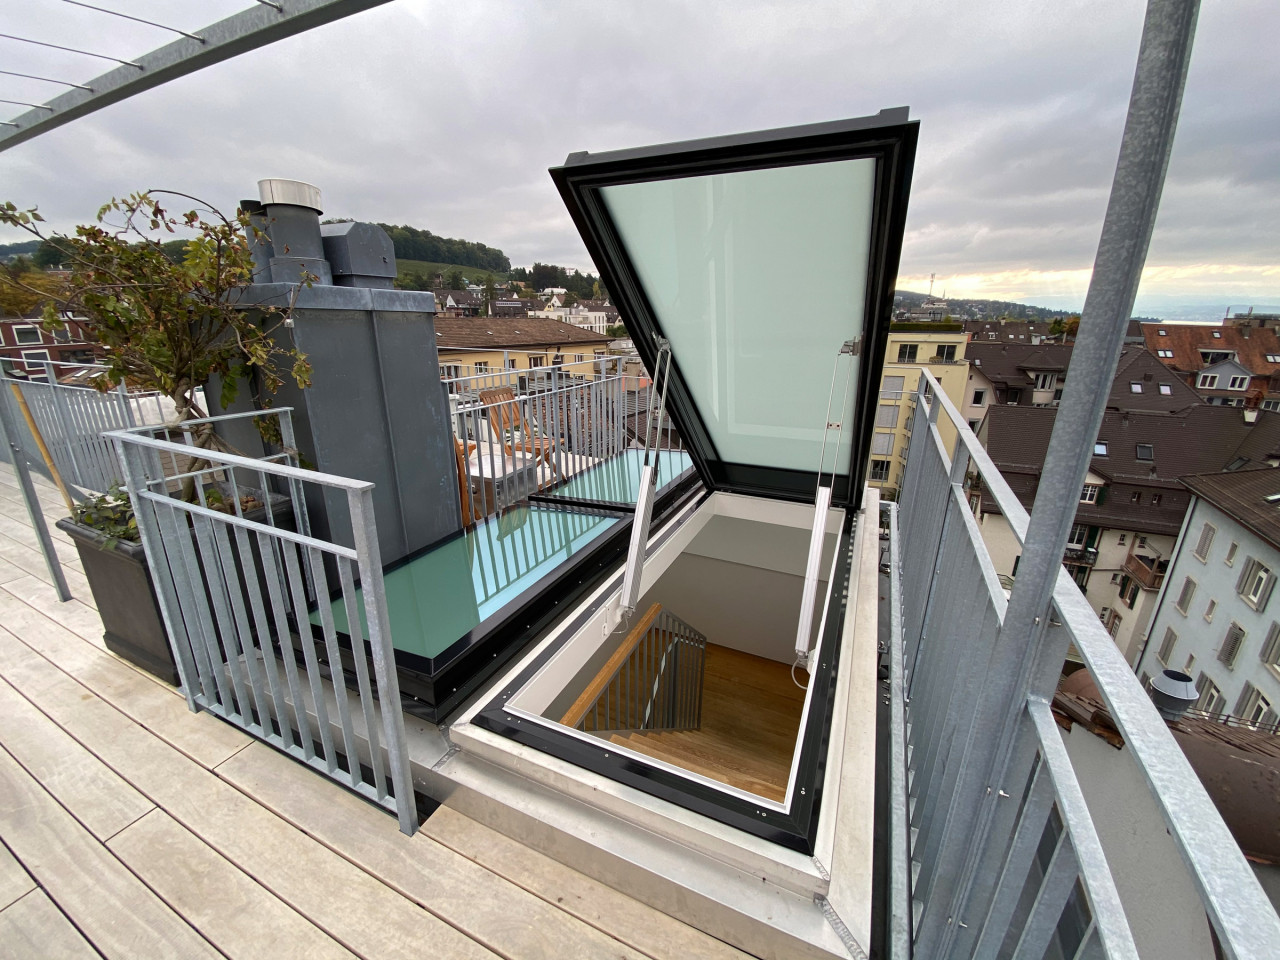 Folding arm² - Cupolux roof terrace exit (video)